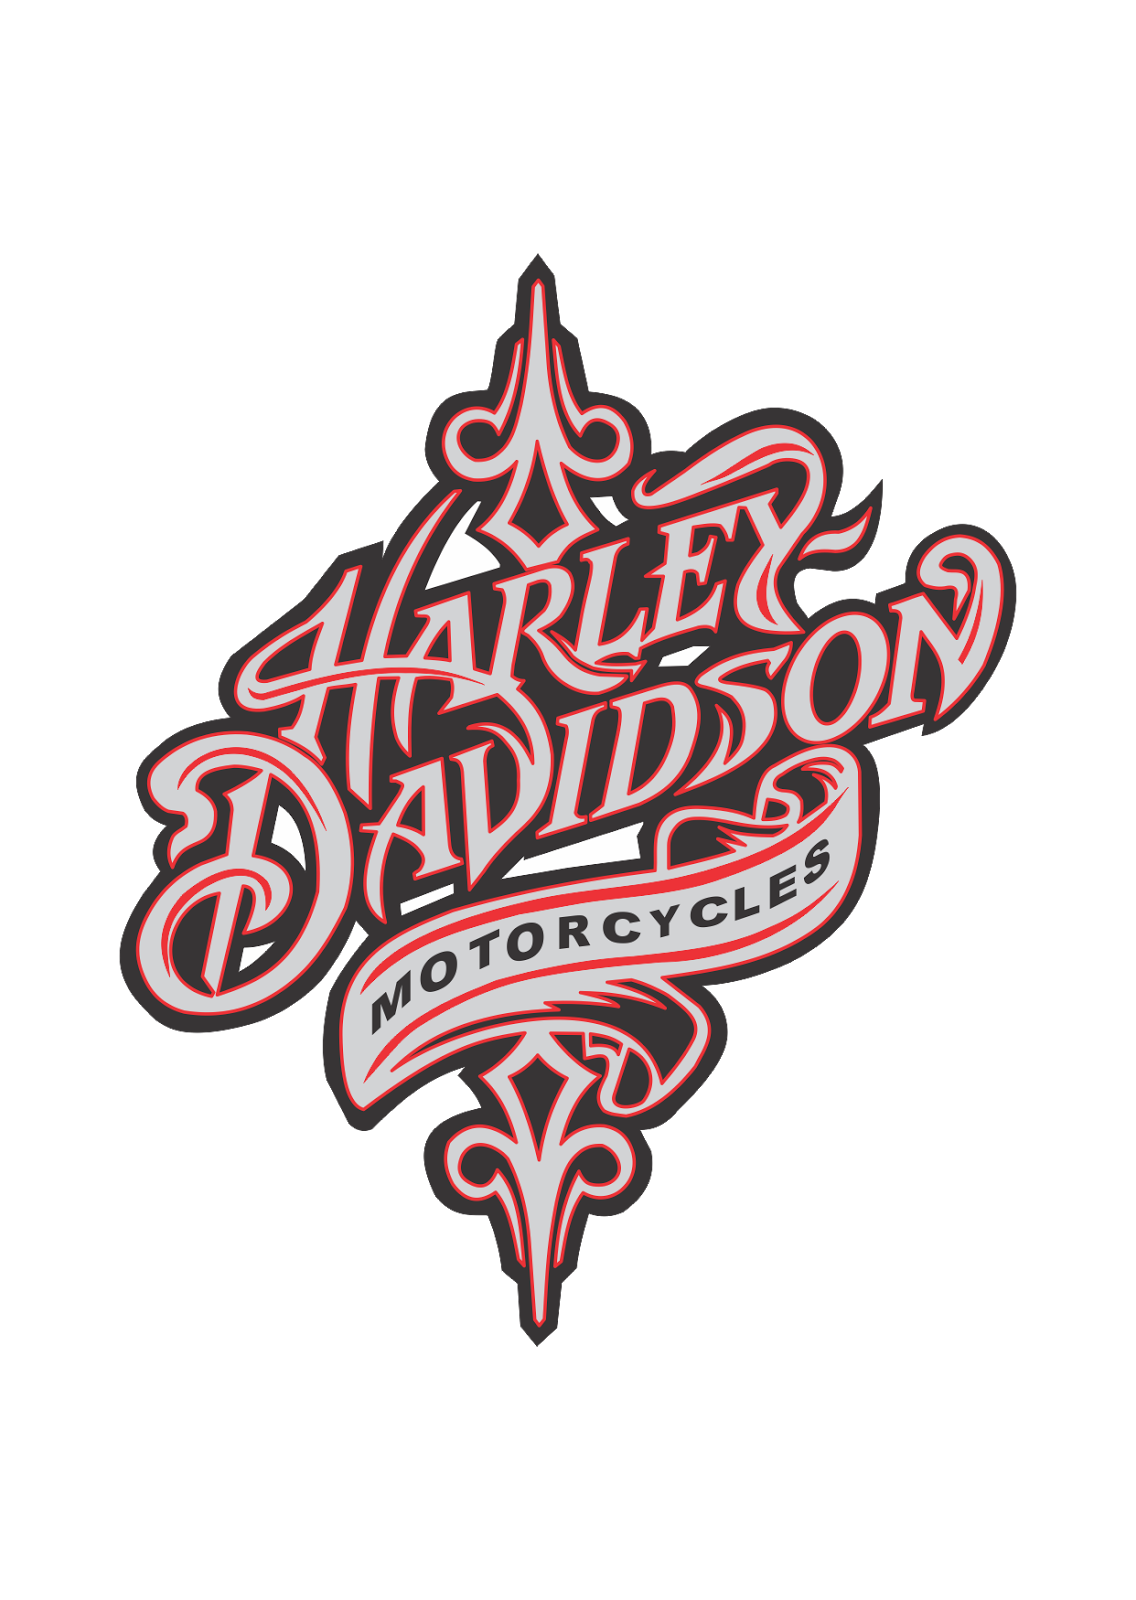 Download Harley davidson motorcycles Logo Vector (Motorcycle company)~ Format Cdr, Ai, Eps, Svg, PDF, PNG